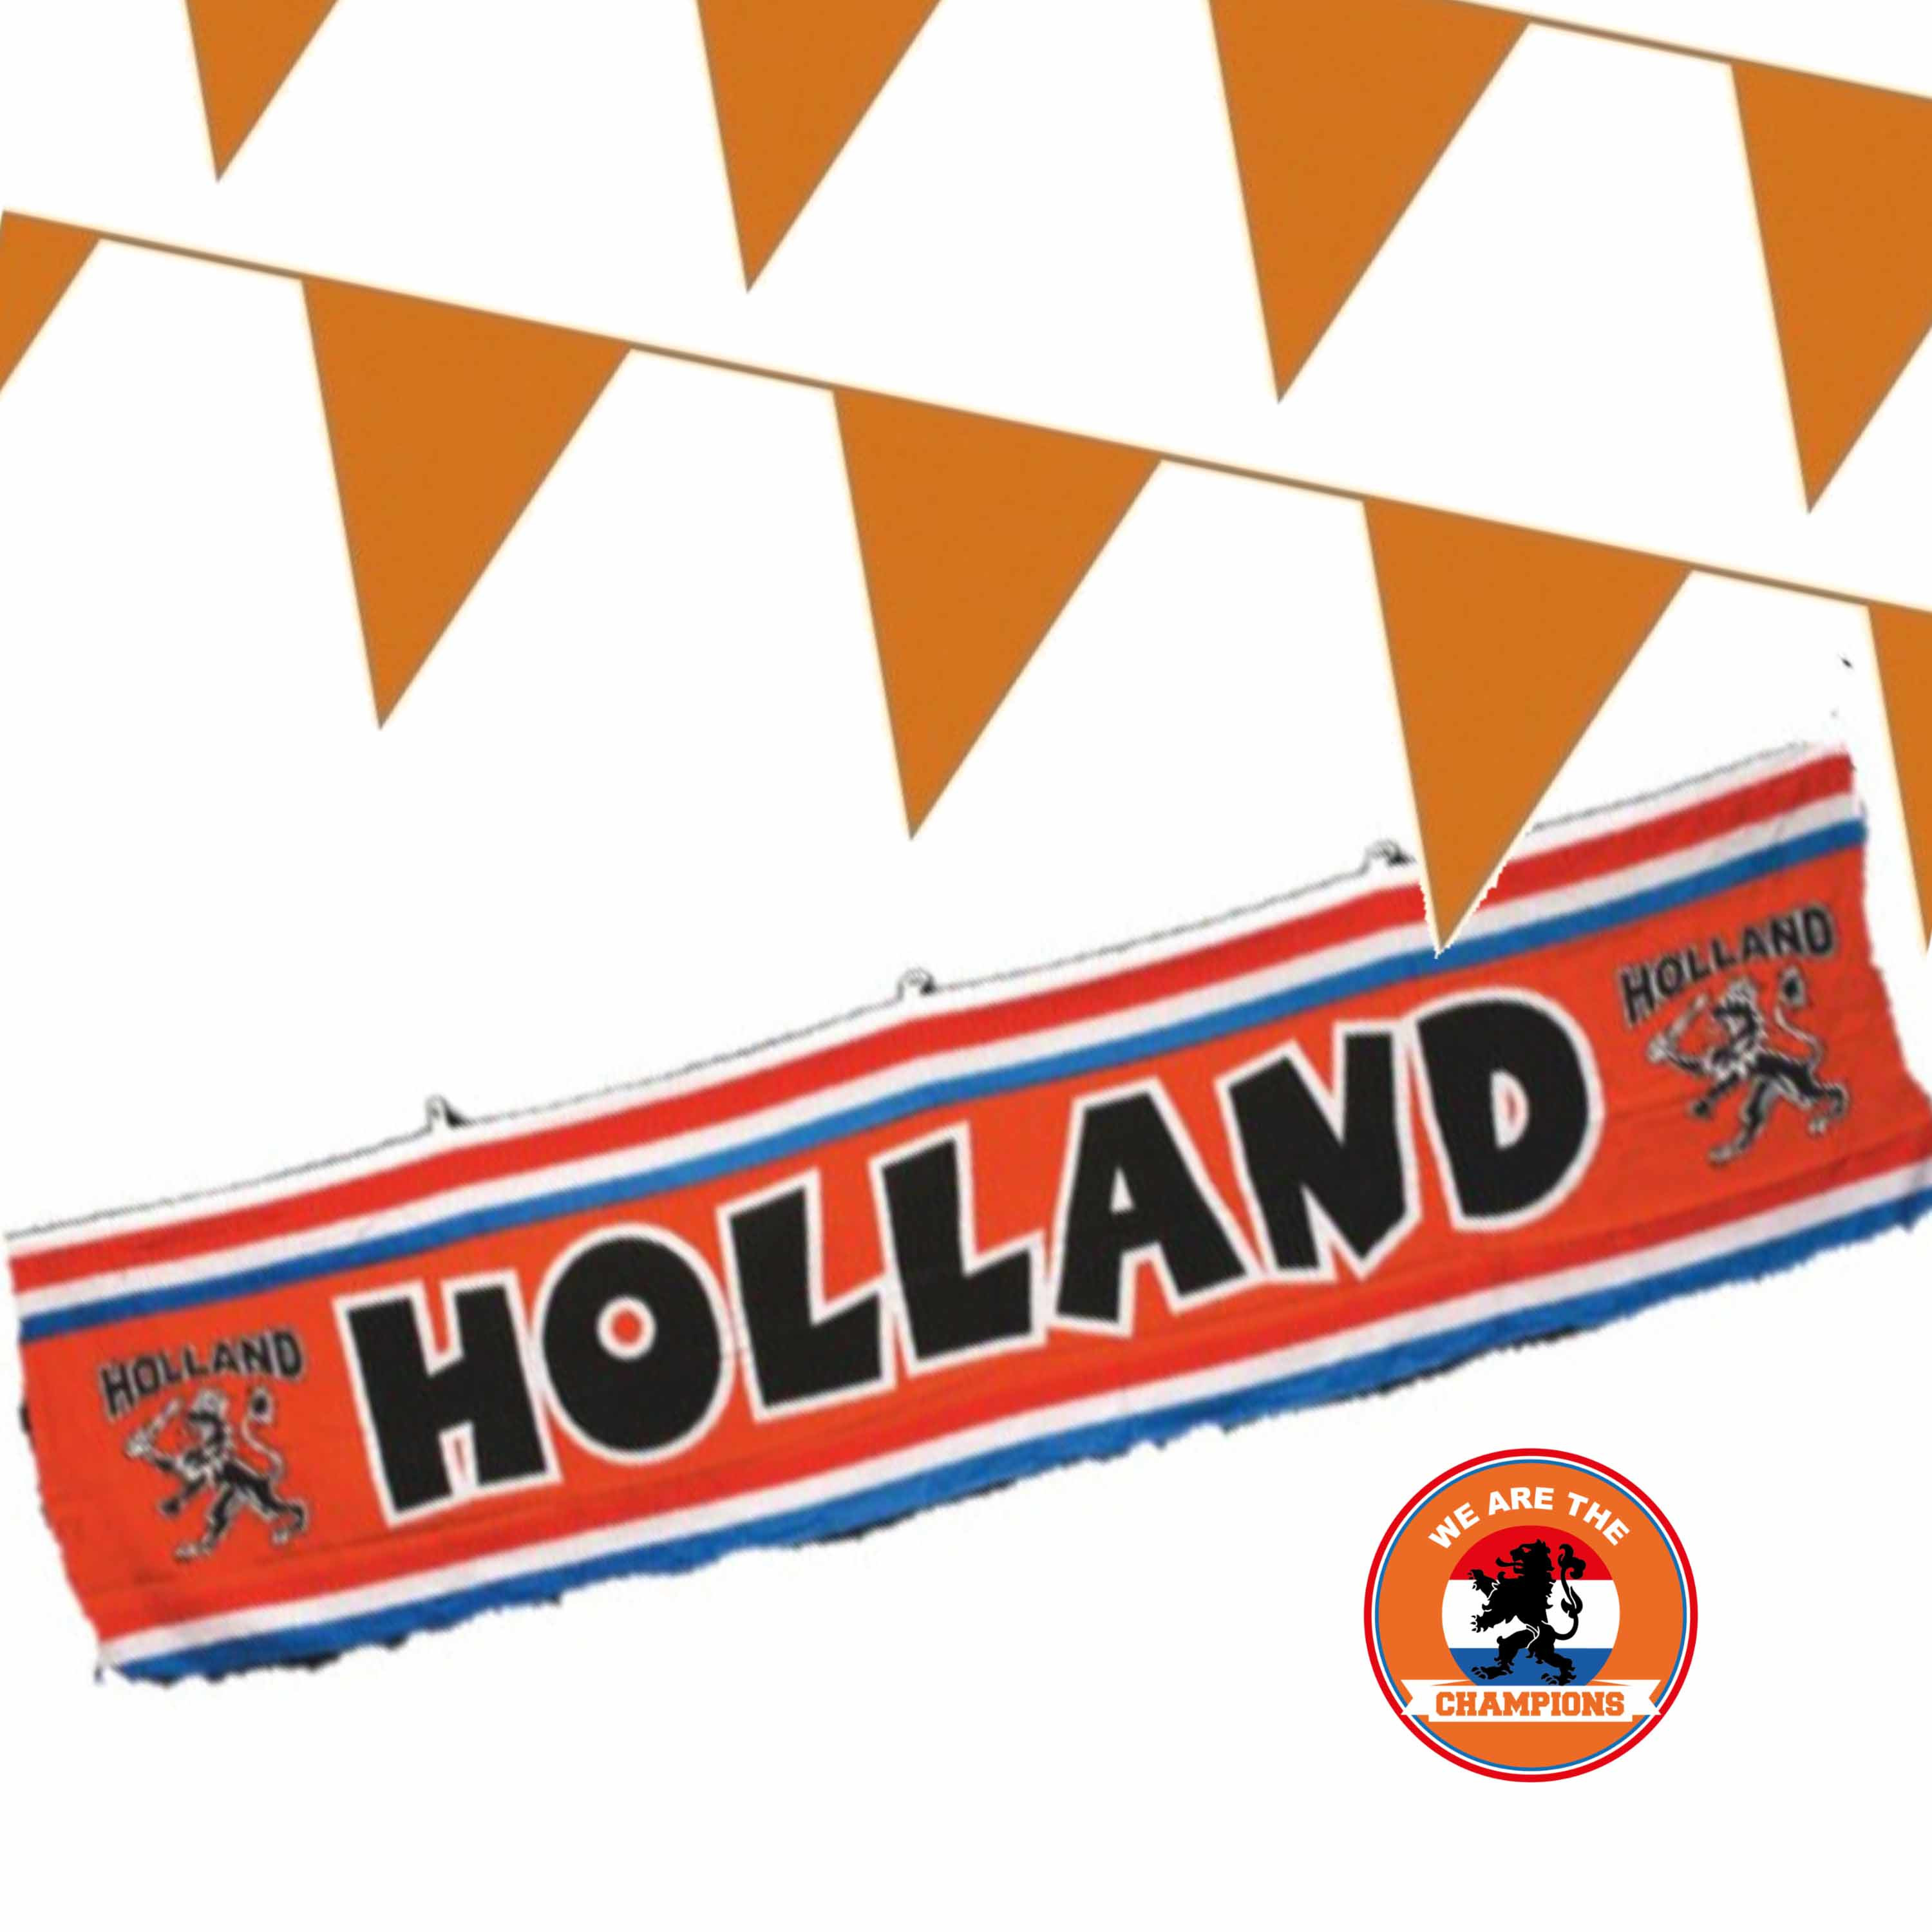 Ek oranje straat huis versiering pakket met oa 1x Holland spandoek 70 x300 en 200 m vlaggenlijnen